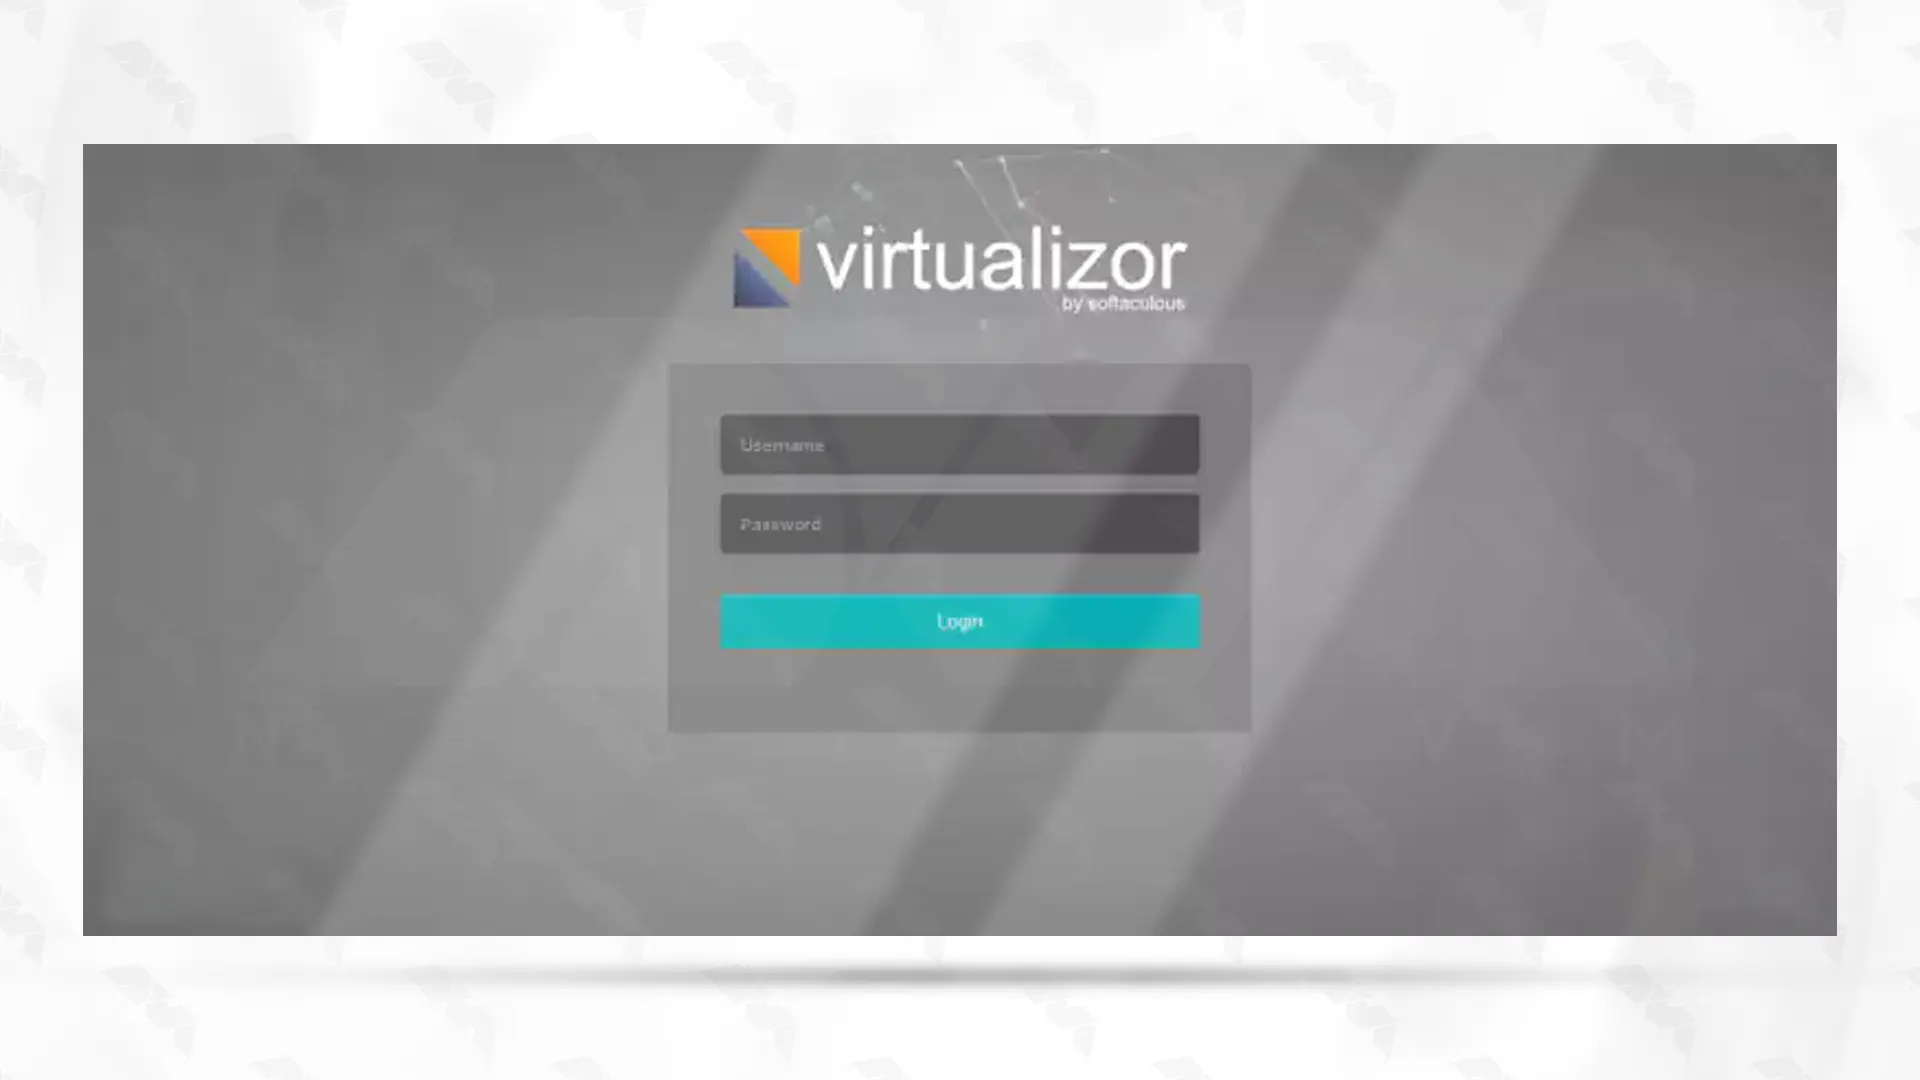 virtualizor login page